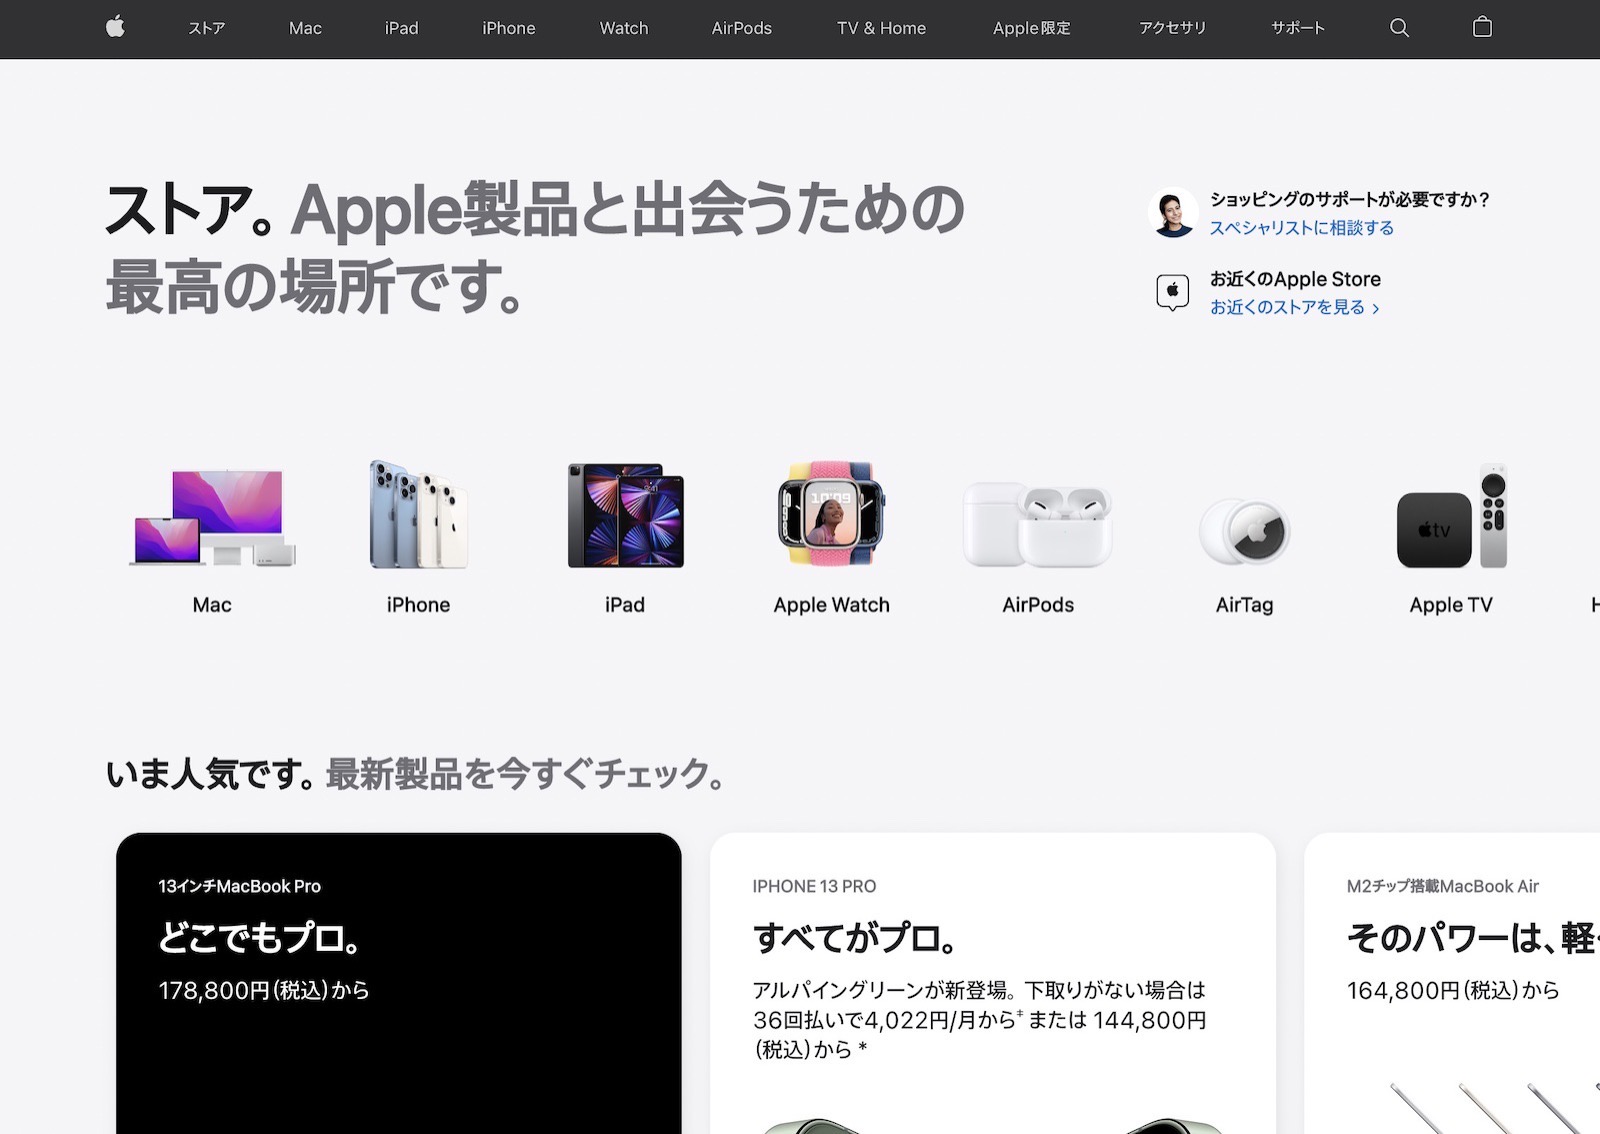 Apple Online Store Japan Pricing has risen